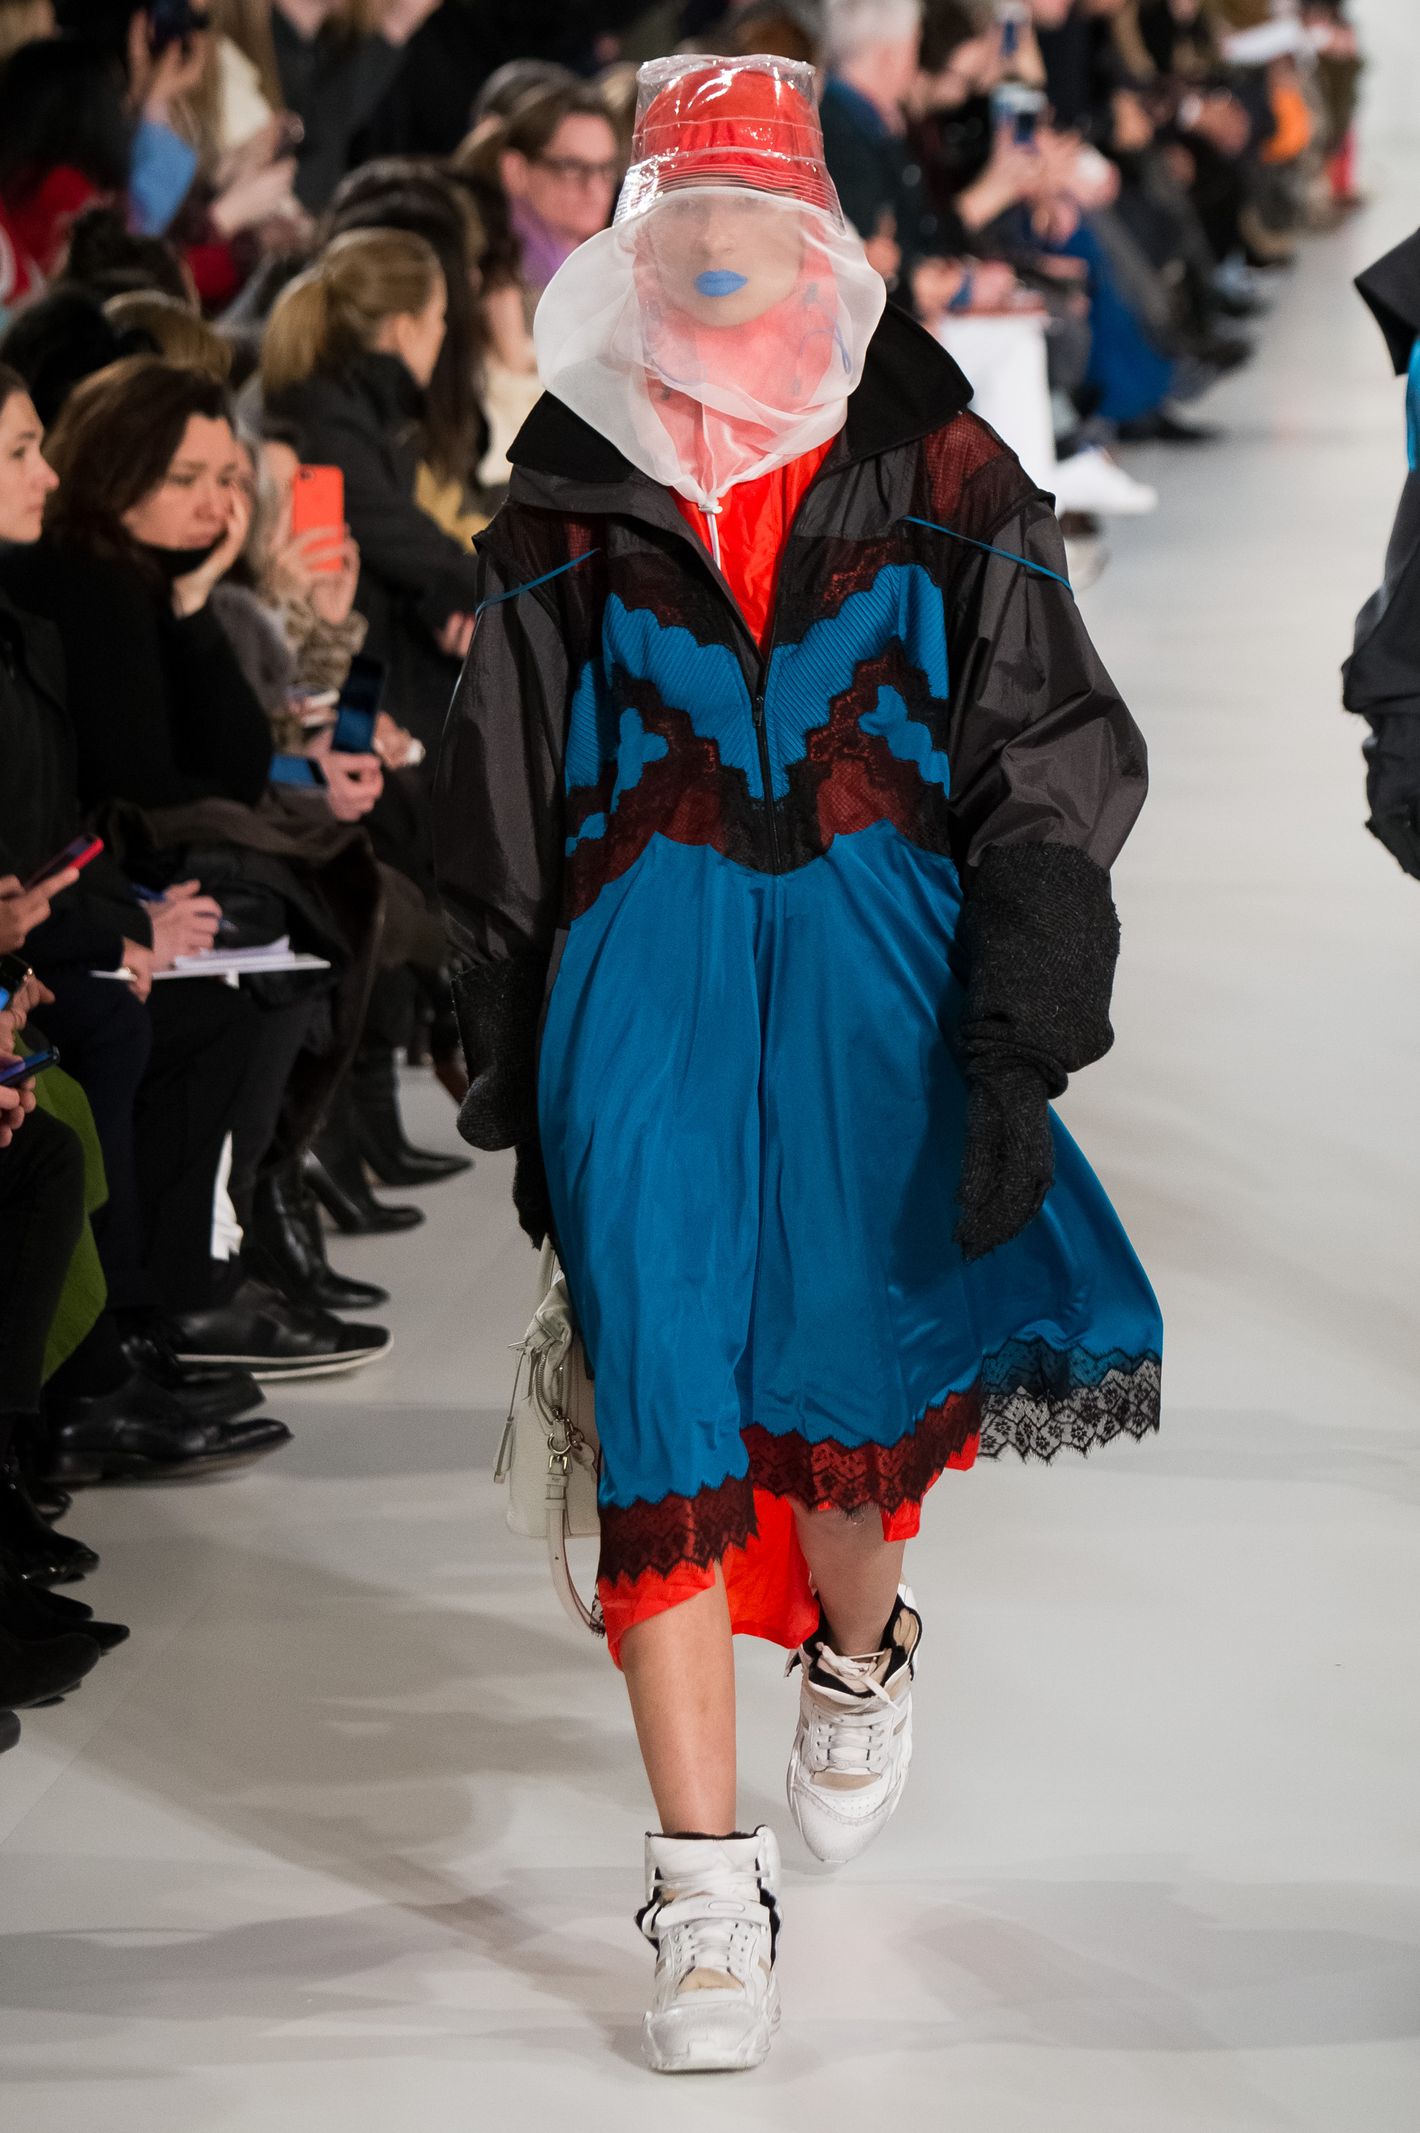 Paris Fashion Week: Margiela Embraces Hoods